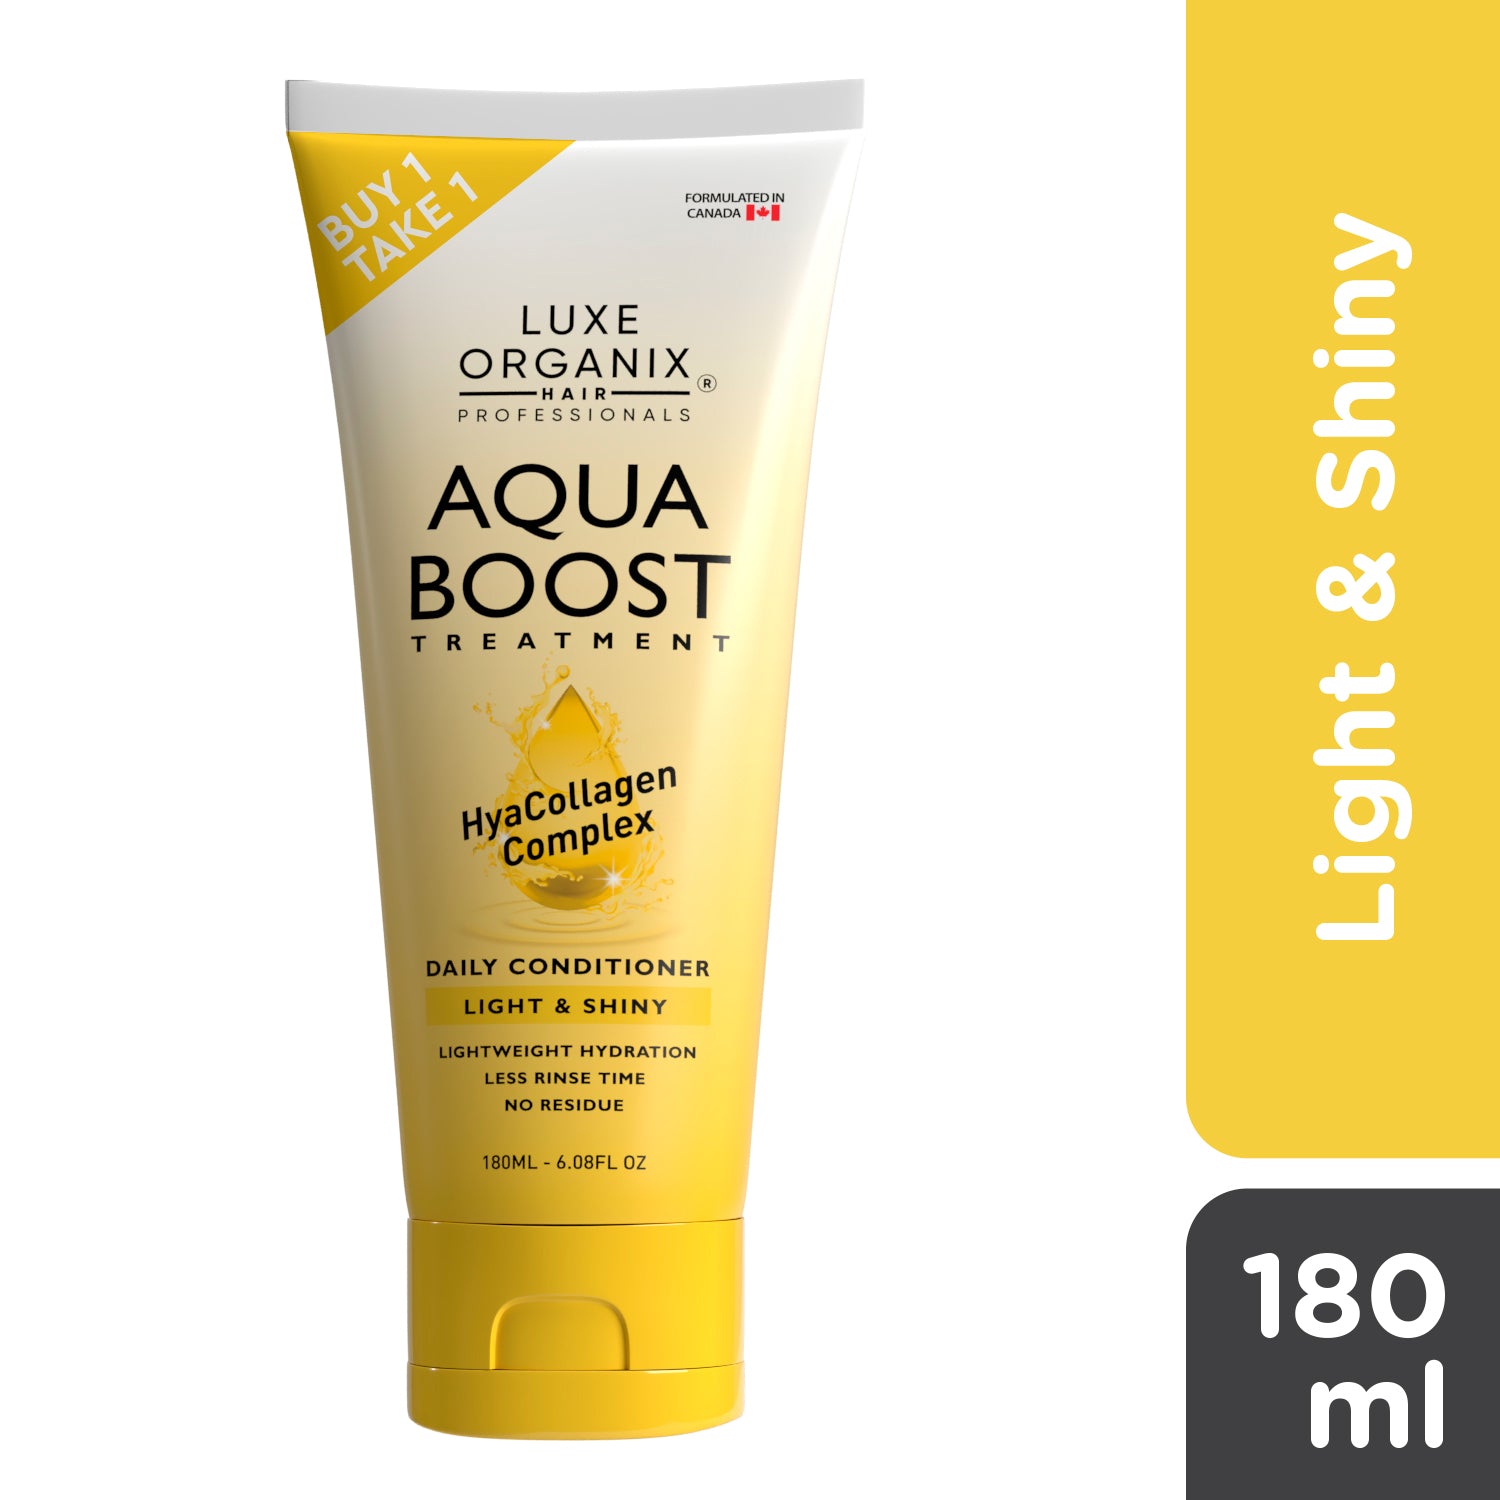 Aqua Boost Professional Treatment 180ml (Buy 1 Take 1) - Light & Shiny